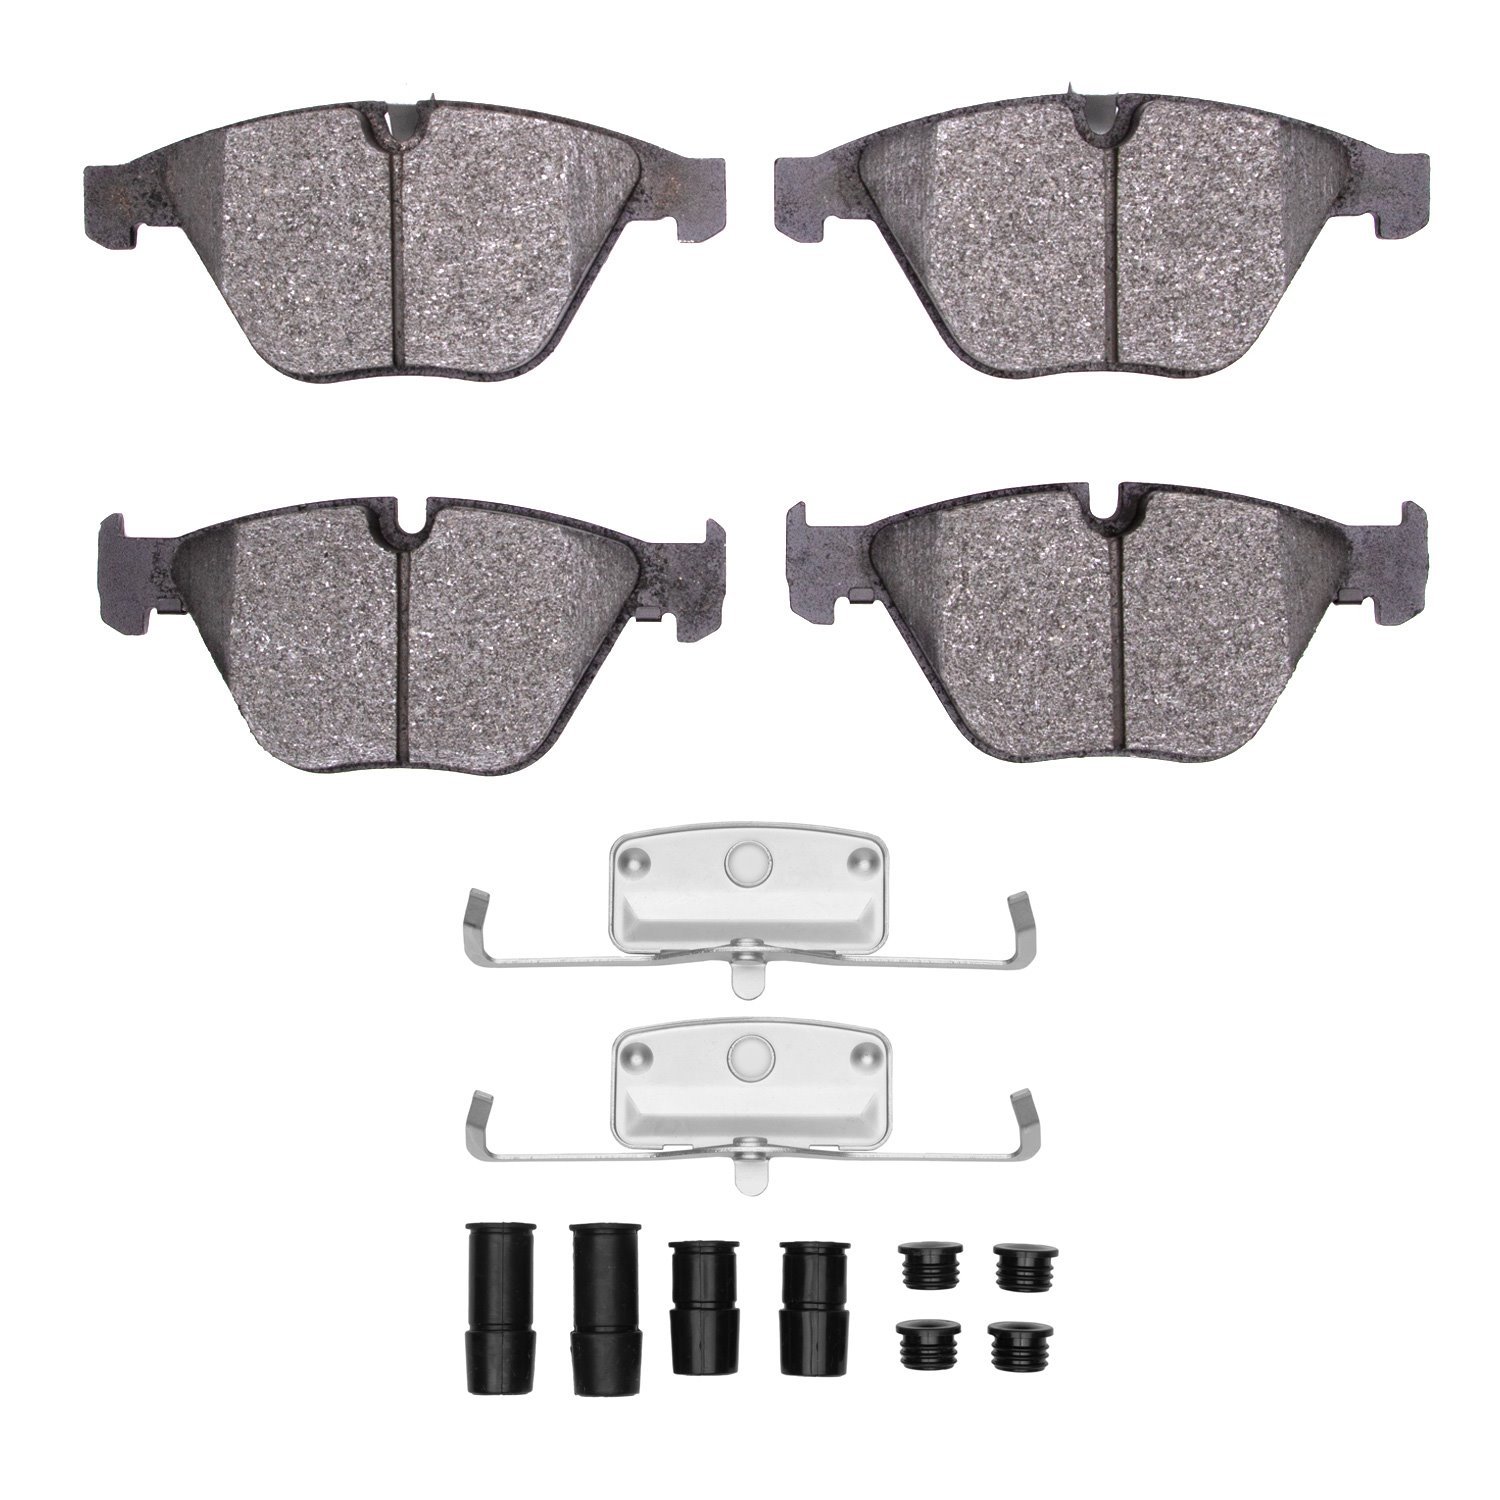 1311-0918-11 3000-Series Semi-Metallic Brake Pads & Hardware Kit, Fits Select BMW, Position: Front